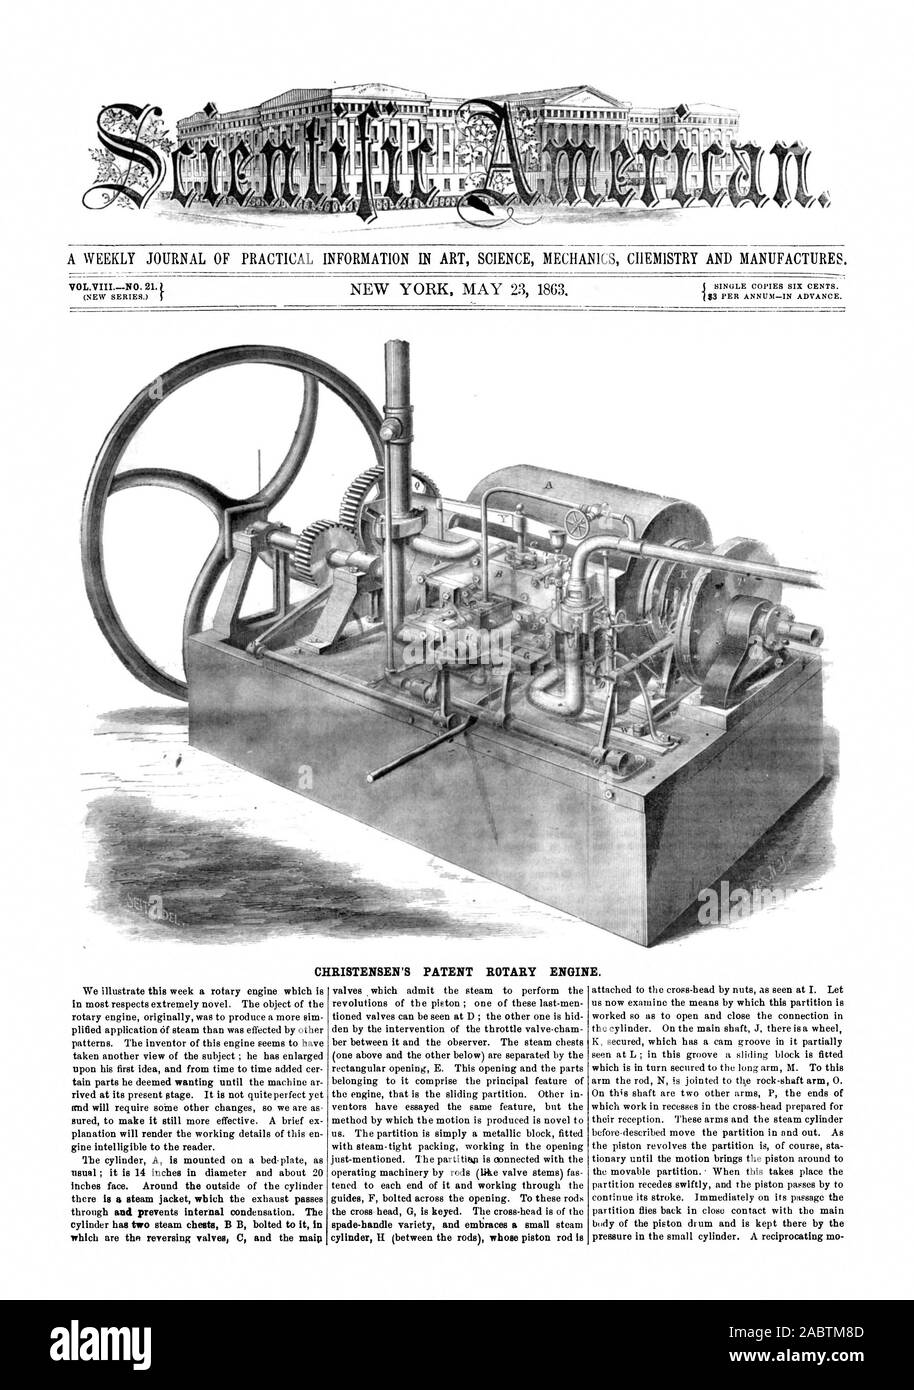 CHRISTENSEN'S PATENT ROTARY ENGINE., scientific american, 1863-05-23 Stock Photo